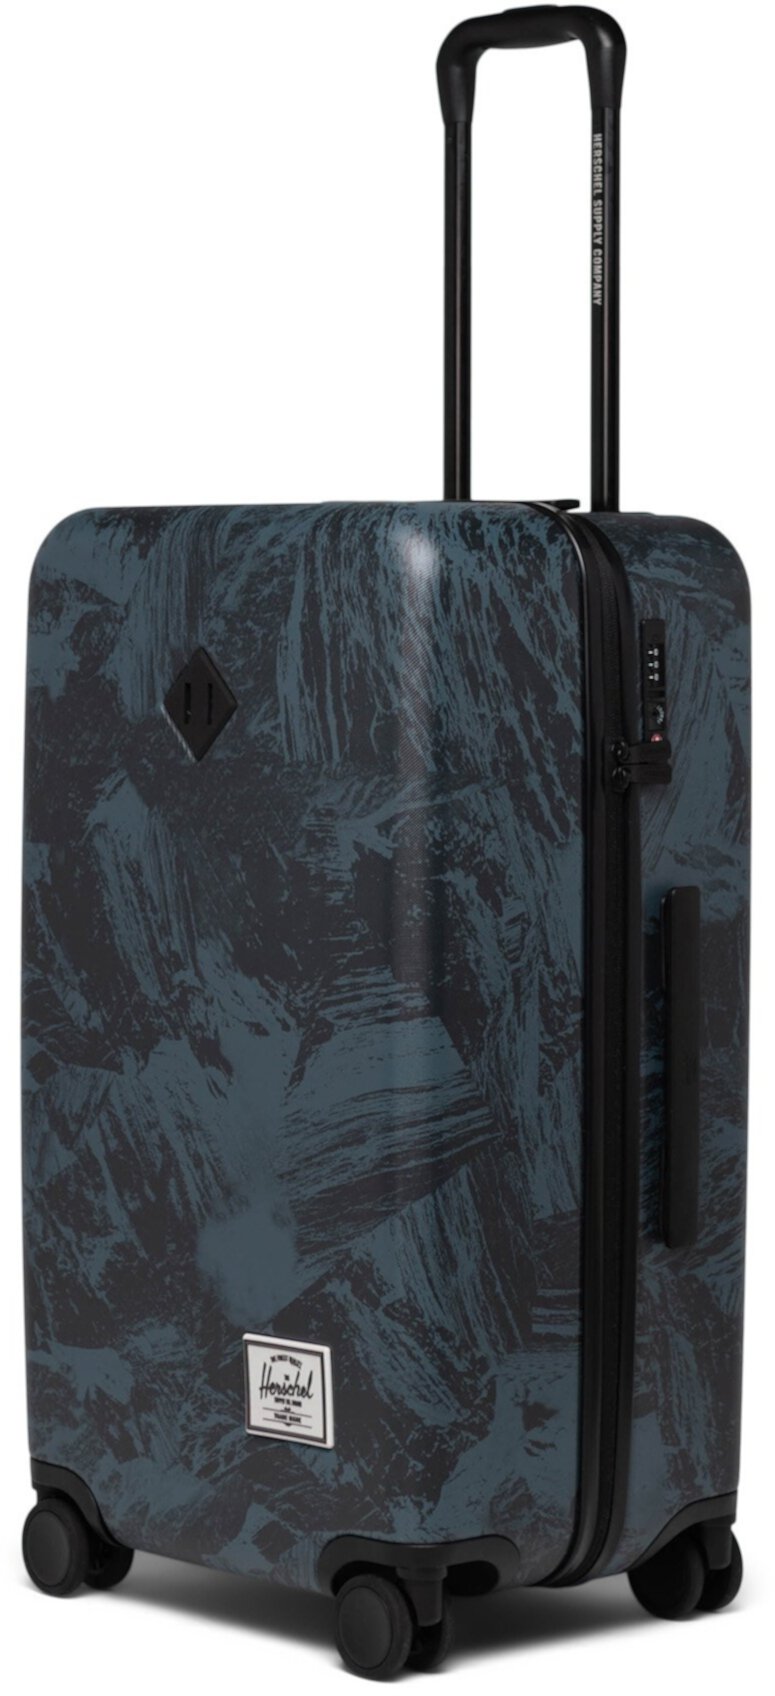 Средний чемодан с твердым корпусом Heritage™ Herschel